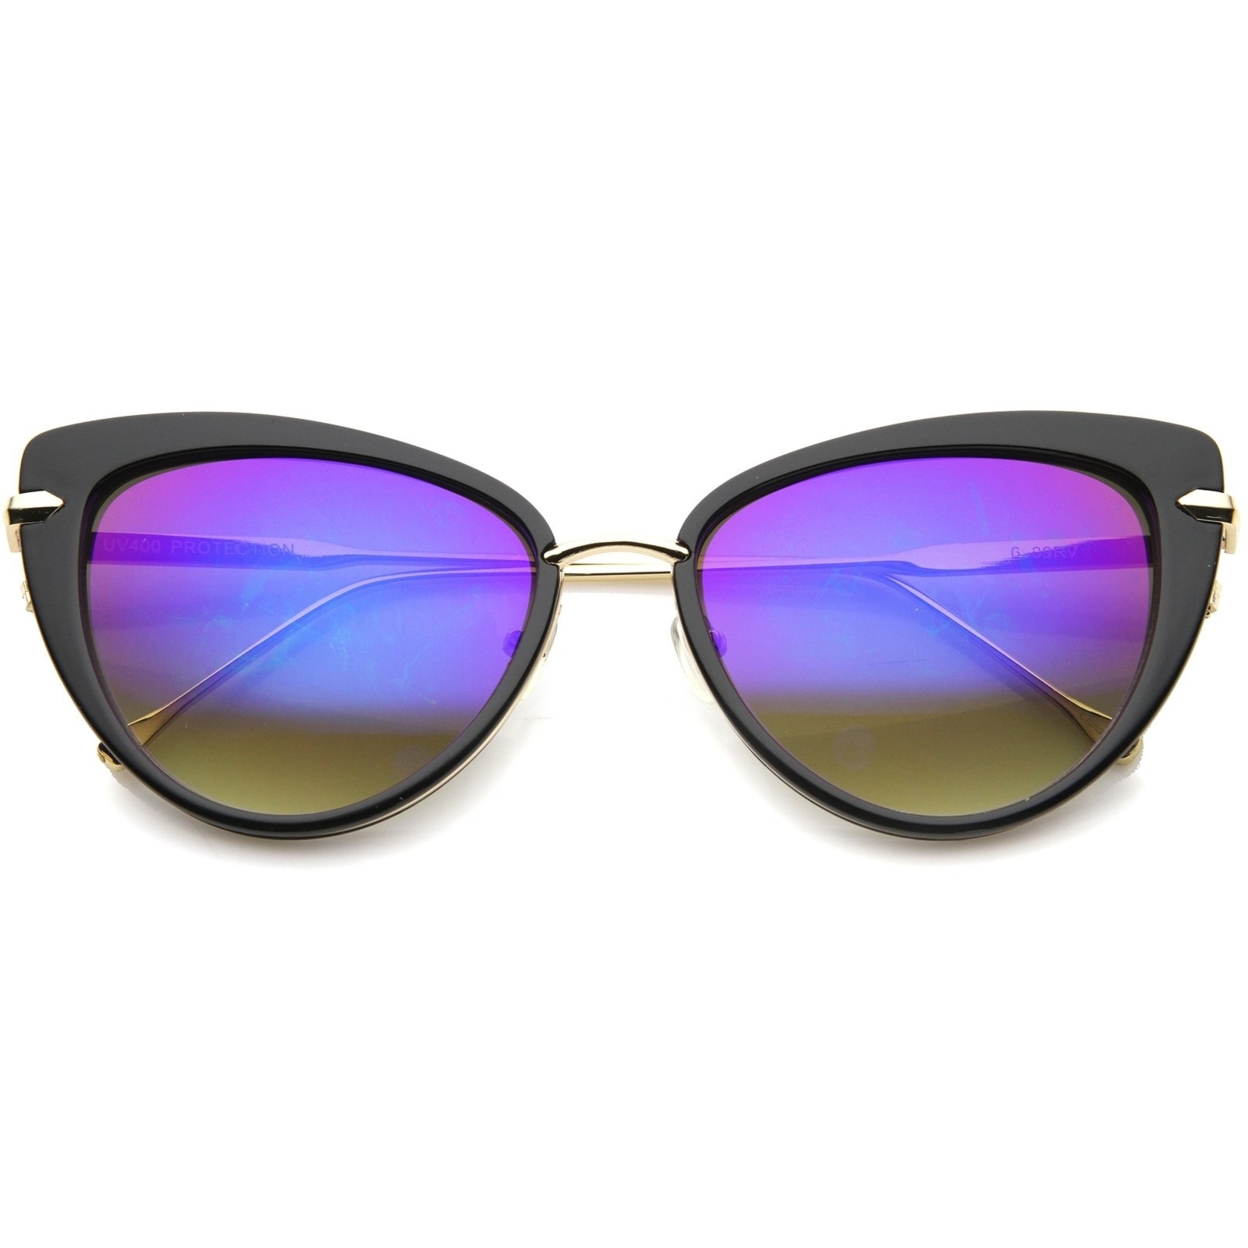 Women's High Fashion Metal Temple Super Cat Eye Sunglasses 55mm - Black-Silver / Magenta Mirror